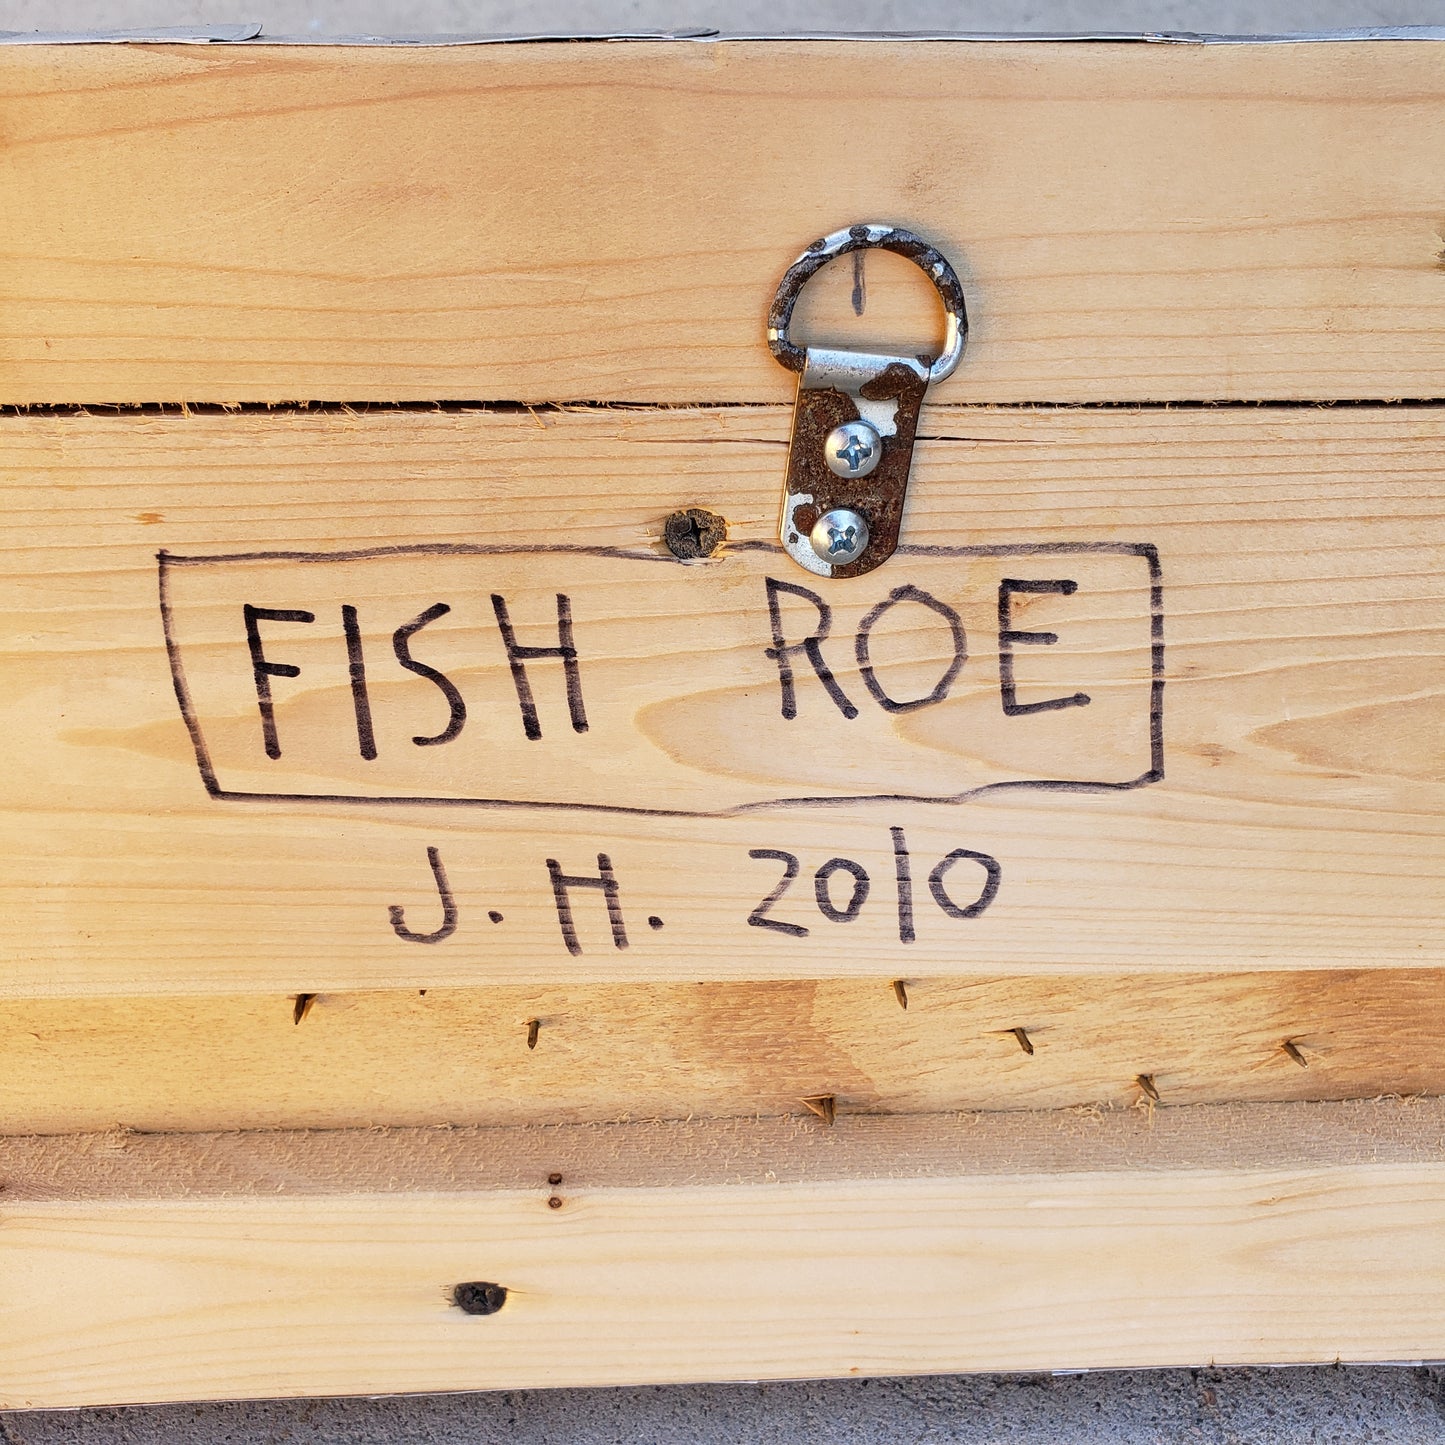 Jack and Jill “Fish Roe” Mixed Media Folk Artwork by J.H., 2010